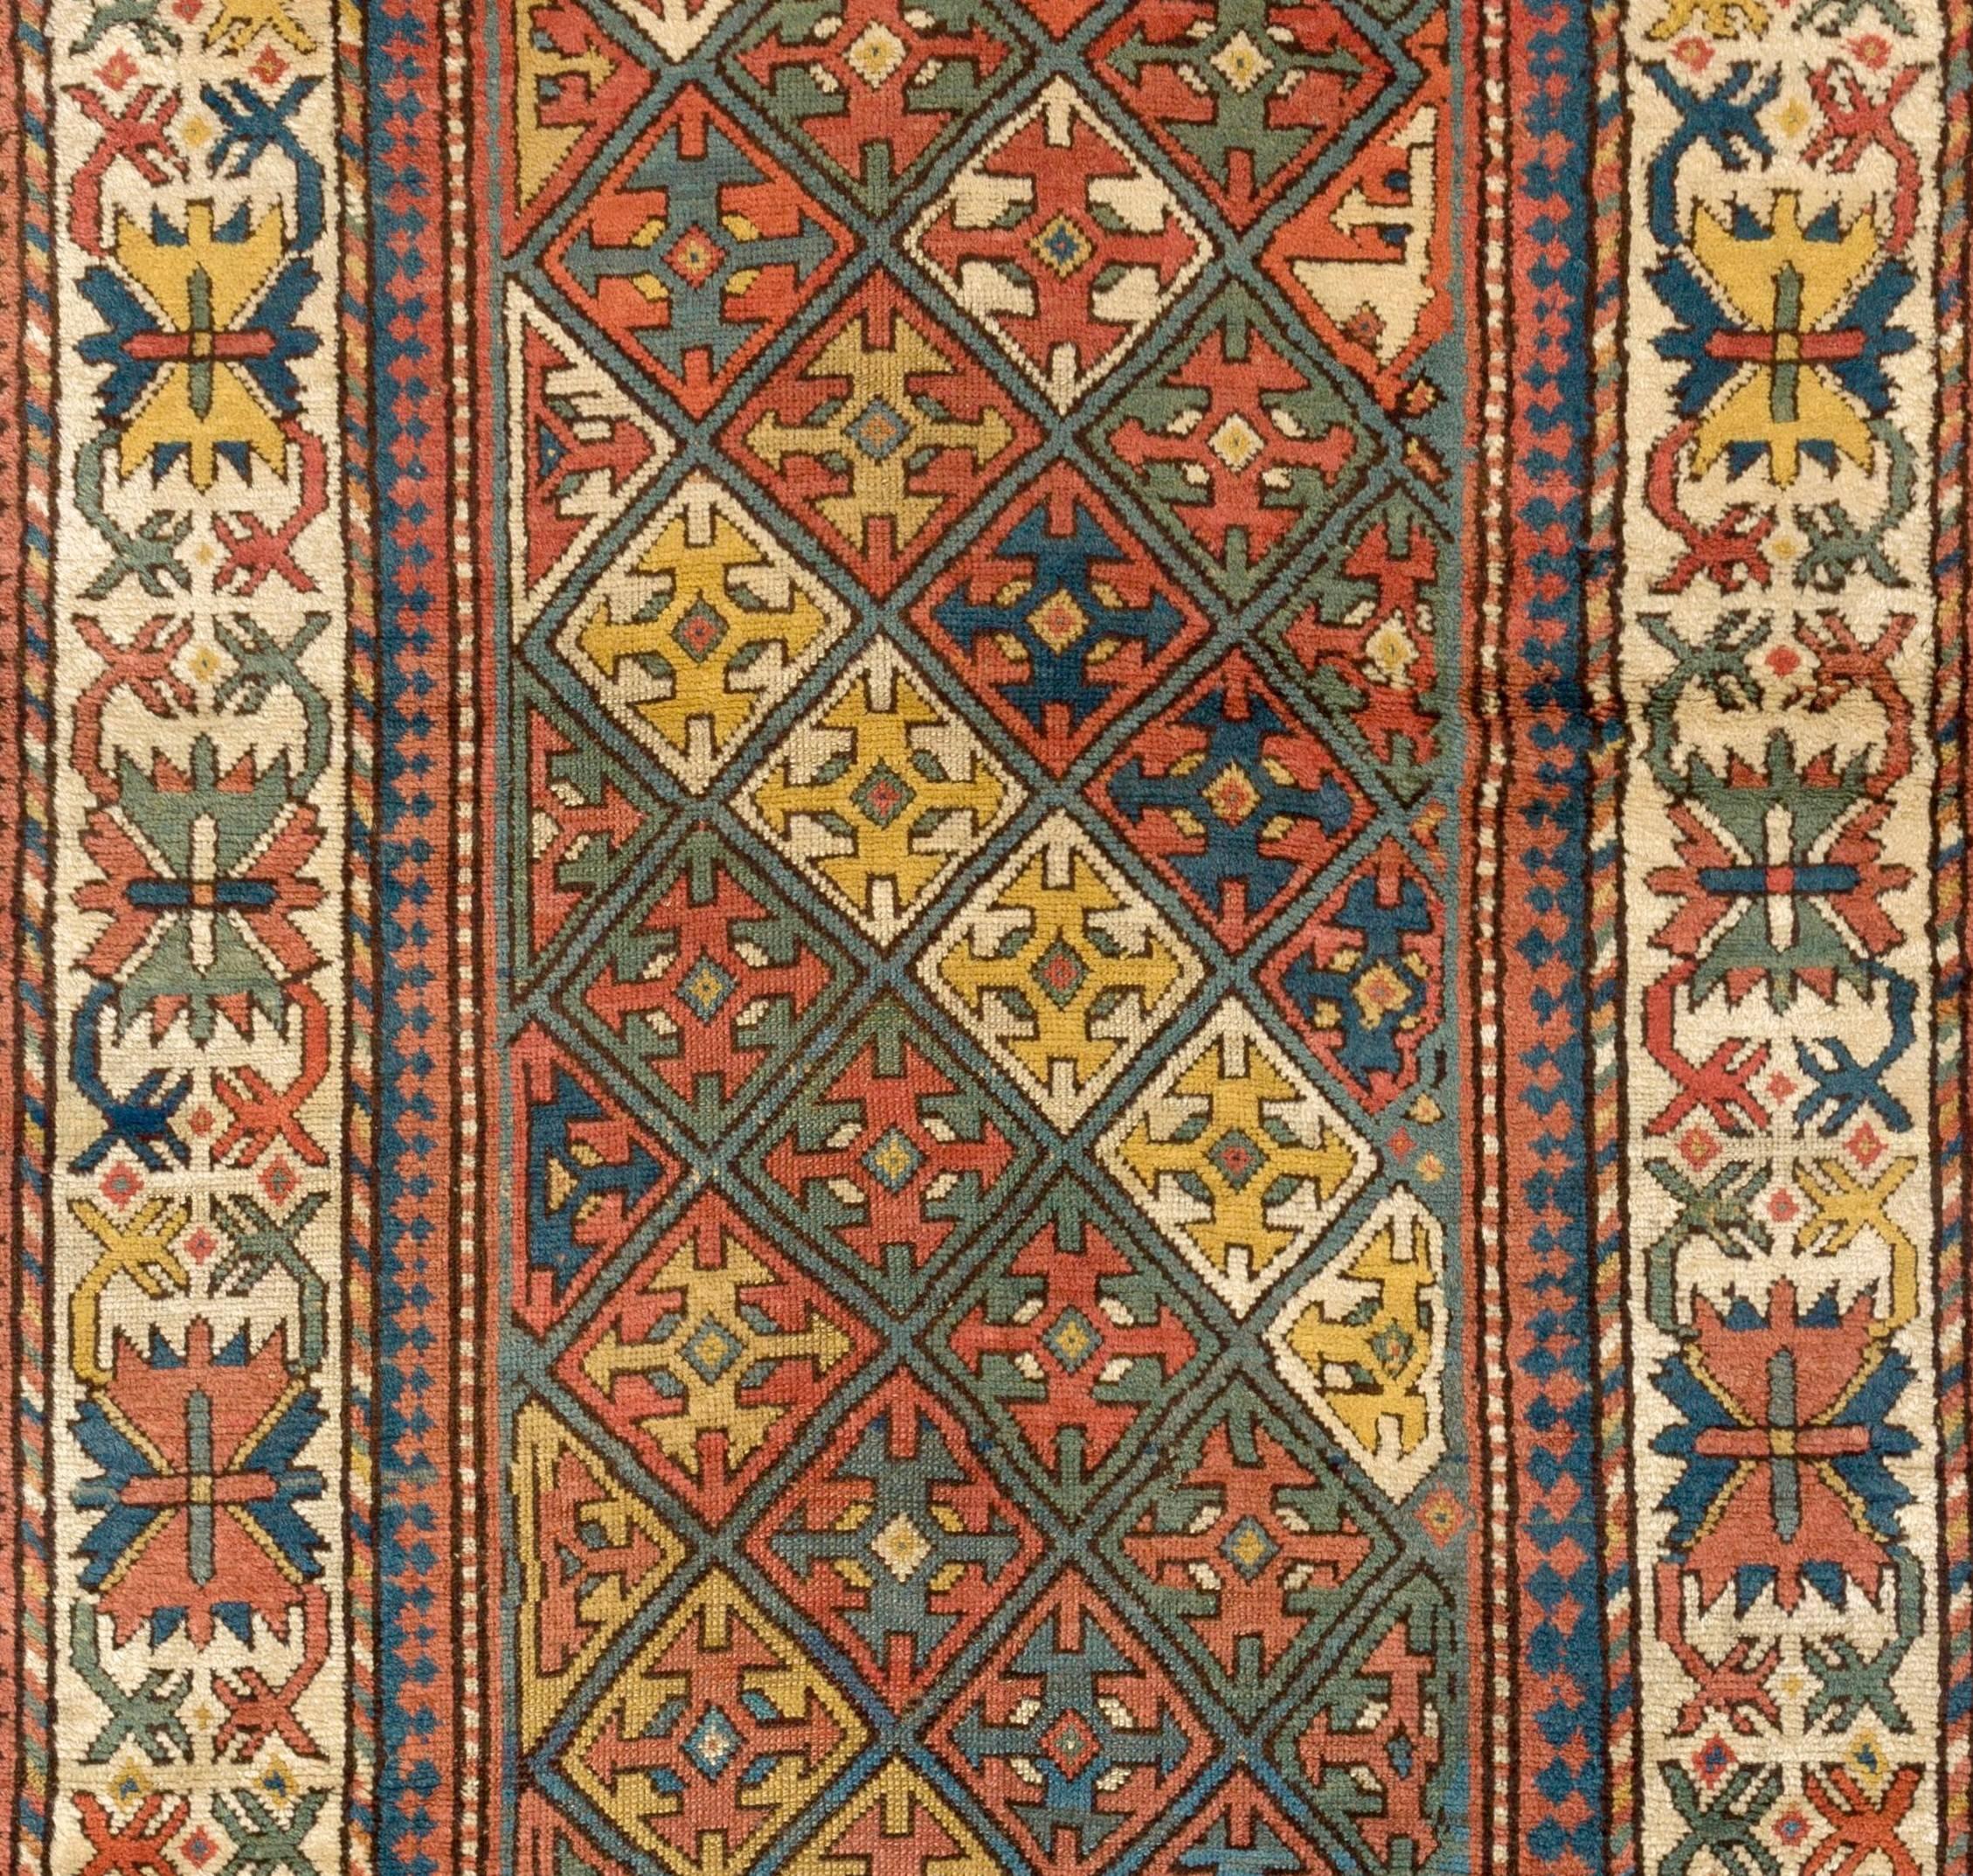 Antique Caucasian Armenian Kazak rug
100% wool, natural dyes, very good condition, all original. 
Measures: 4 x 7.4 Ft.